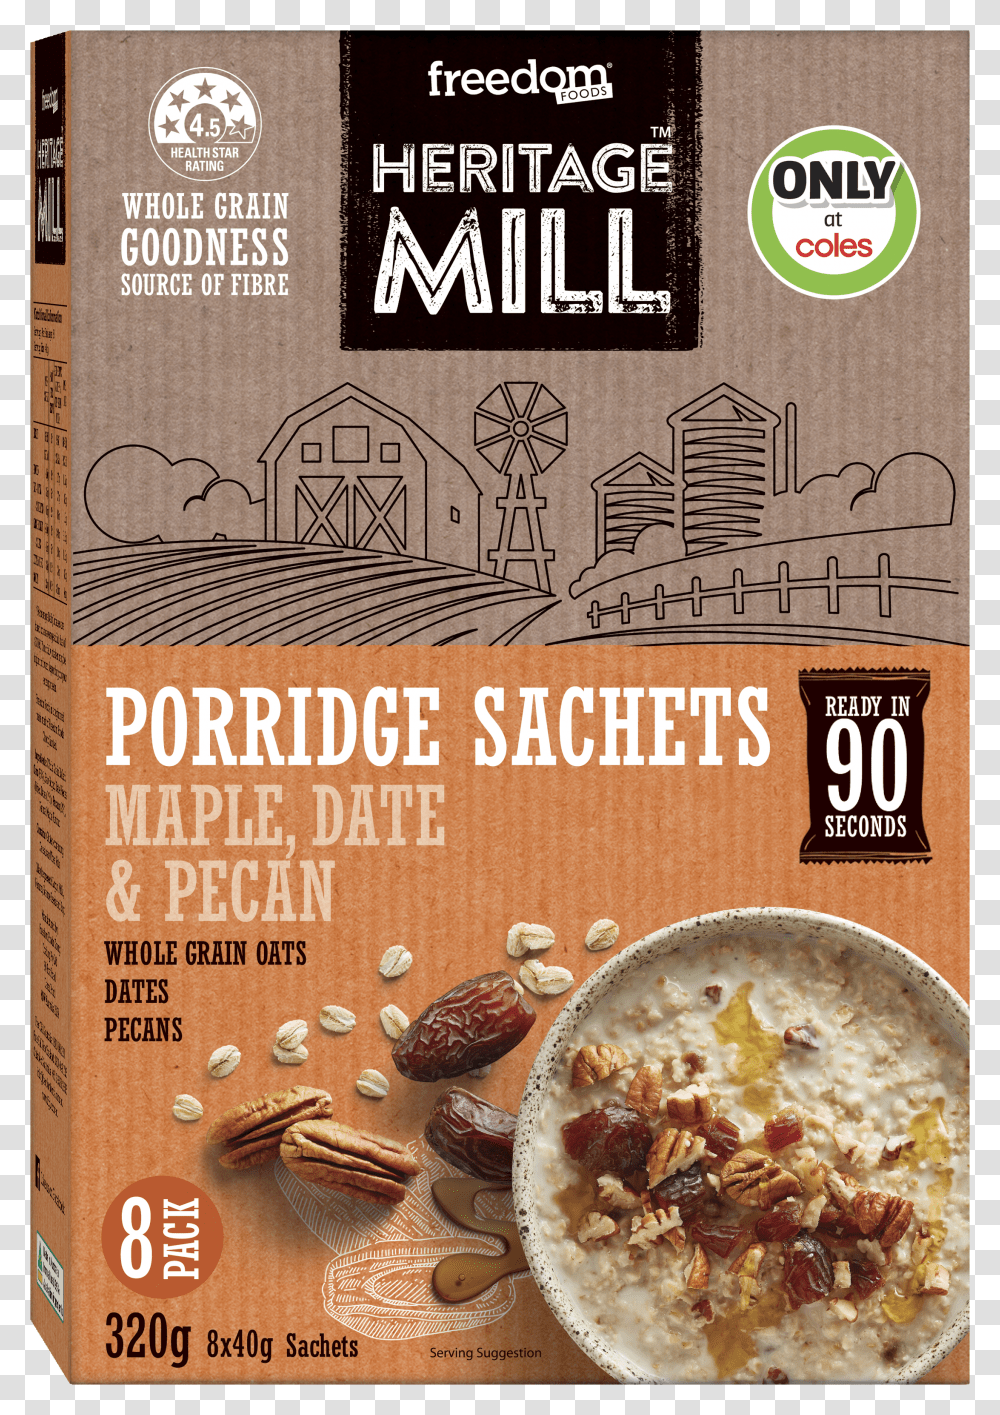 Heritage Mill Porridge Sachets Transparent Png